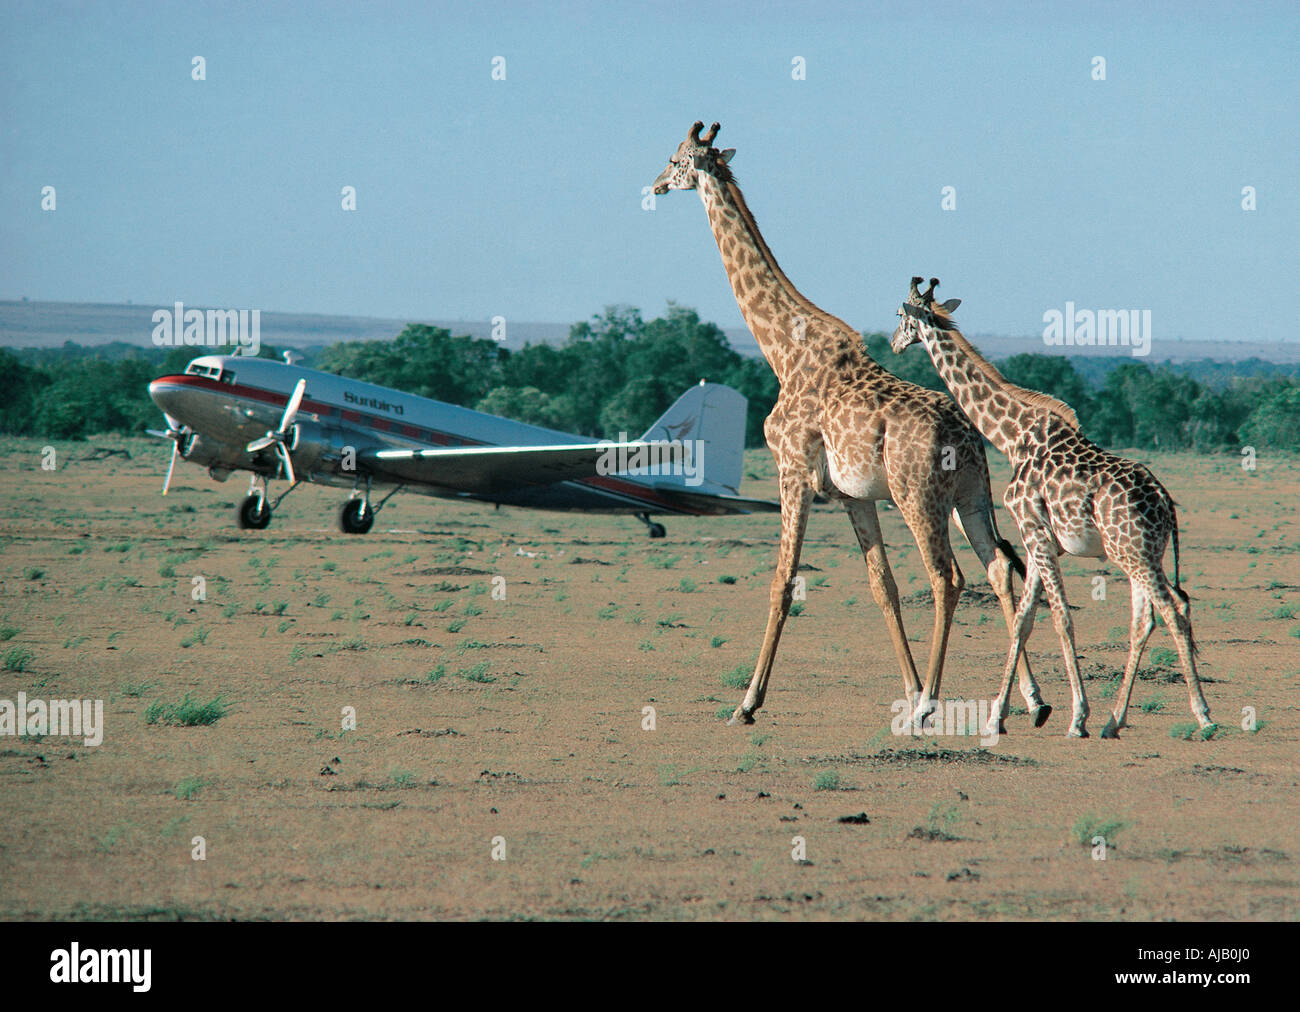 Two Masai Giraffe walking close to a plane on the Musiara Airstrip Masai Mara National Reserve Kenya East Africa Stock Photo